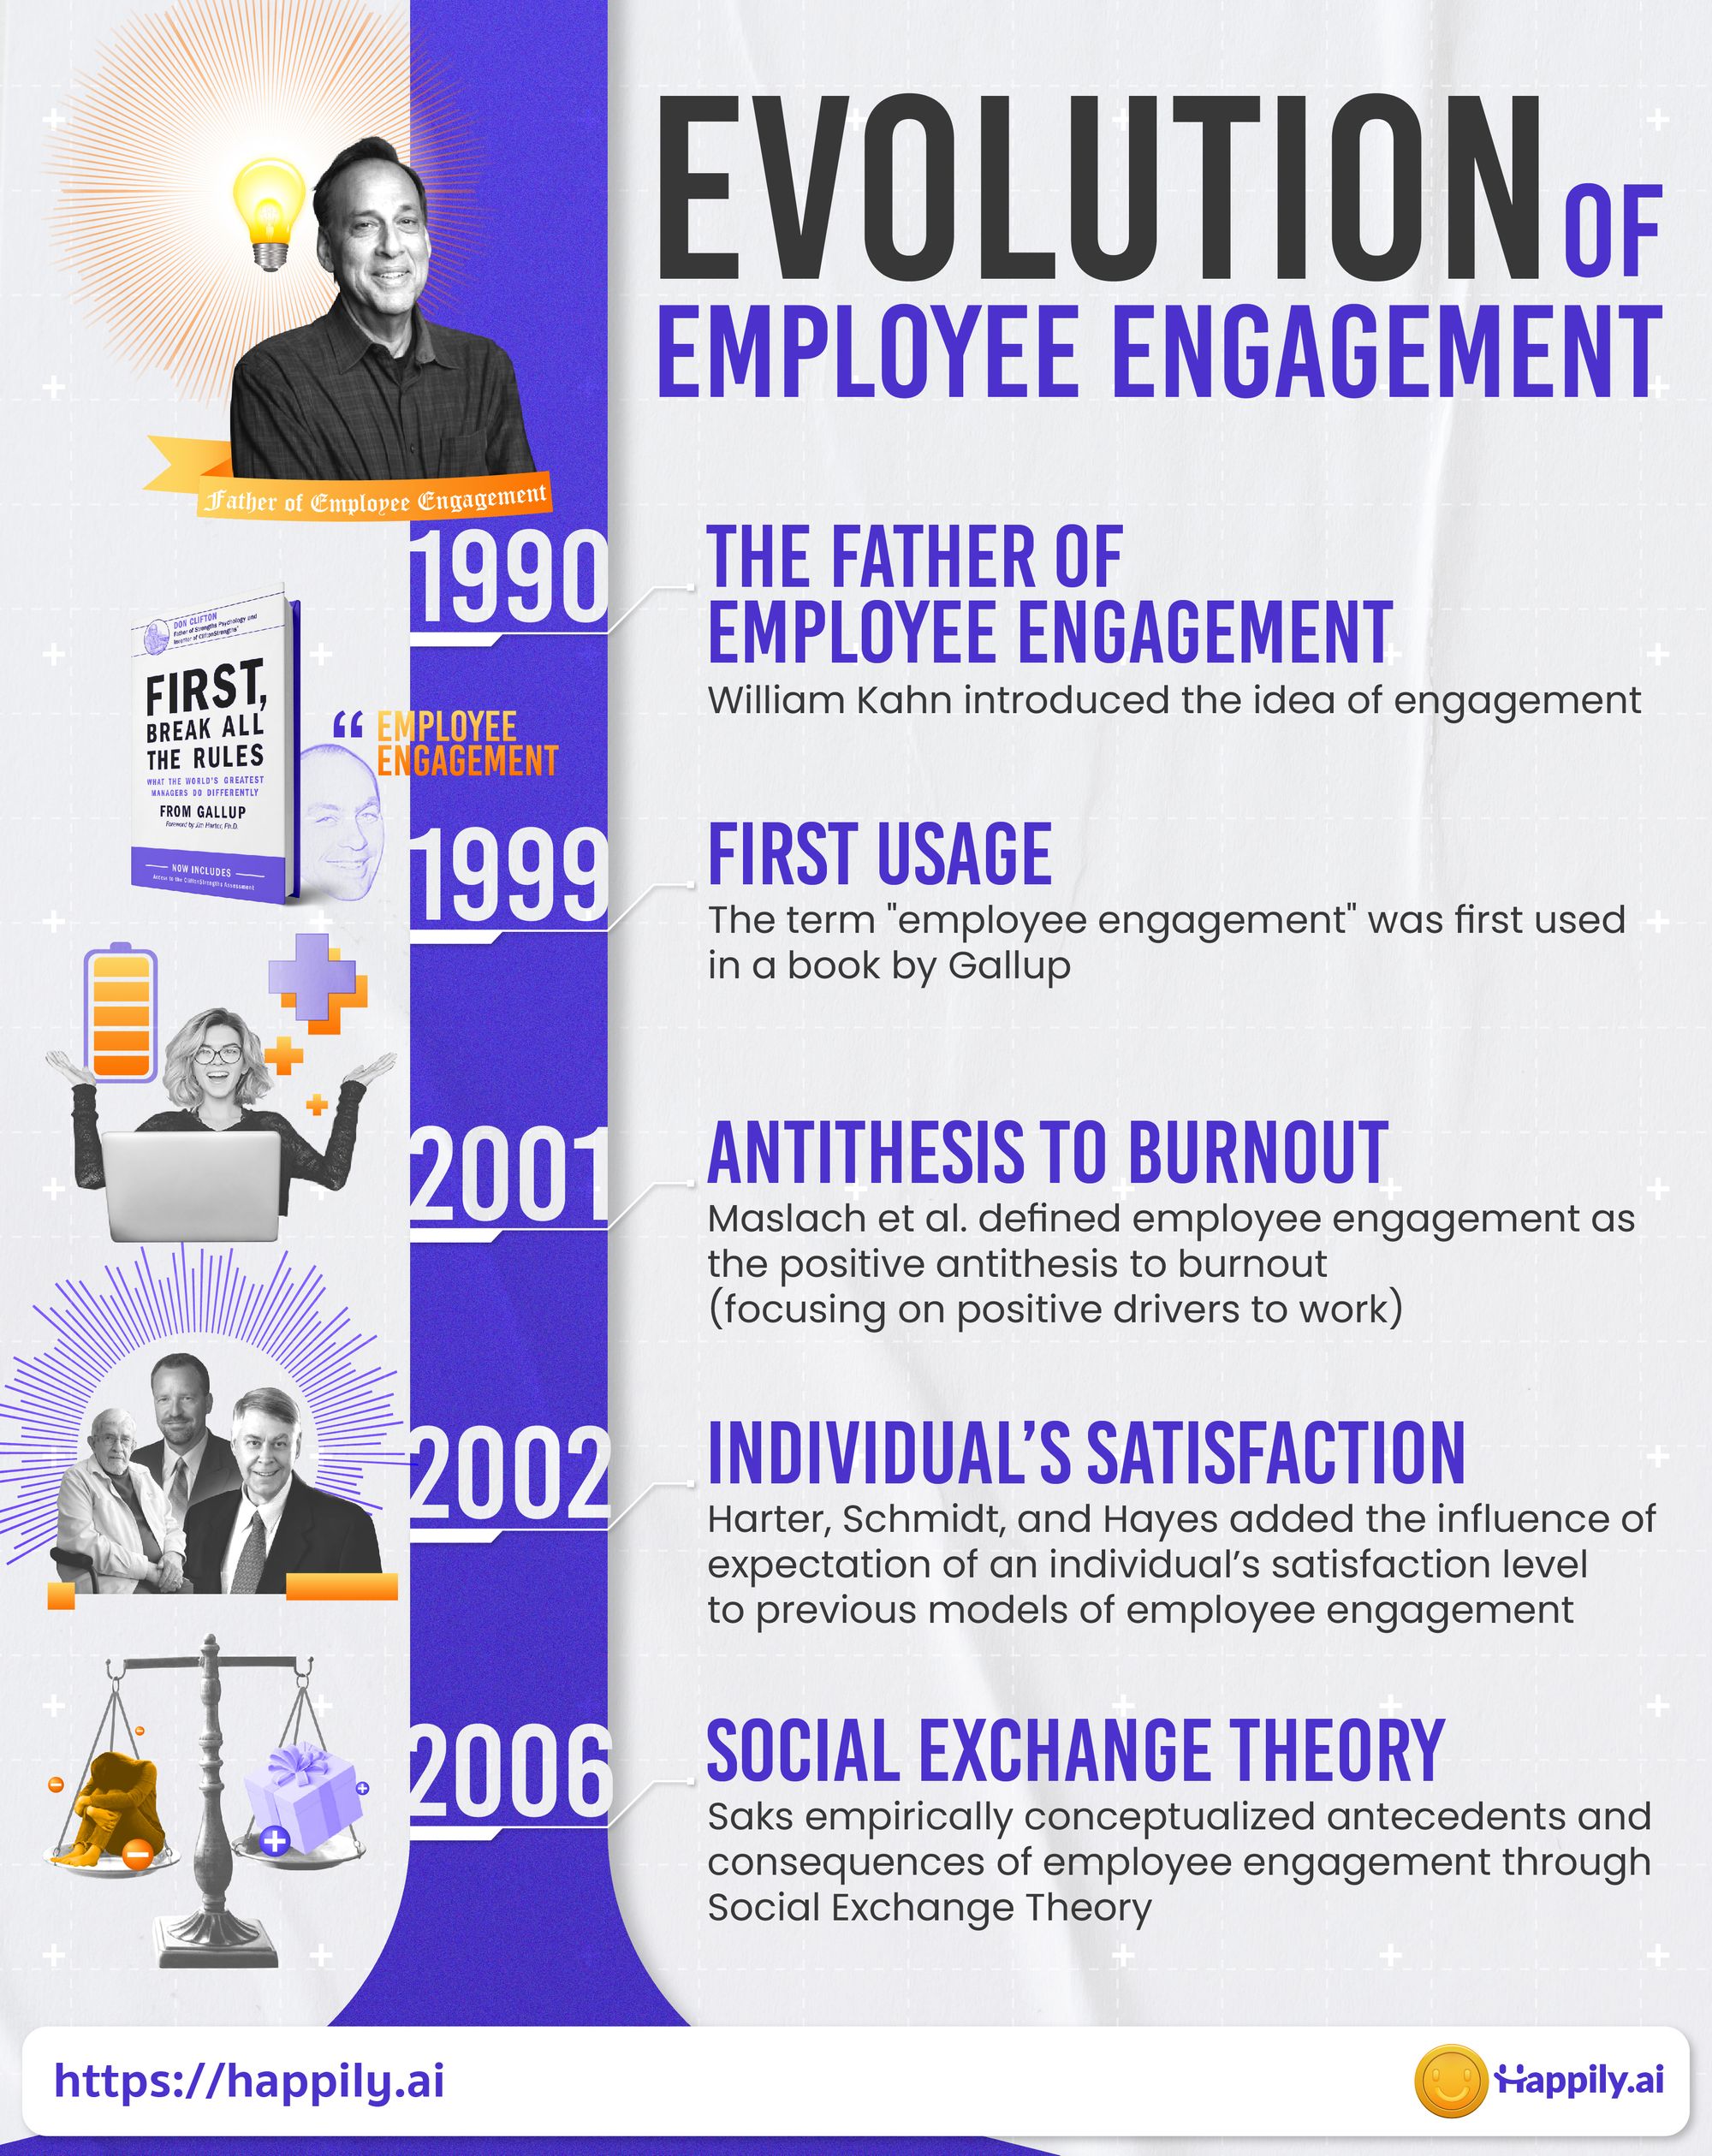 Evolution of Employee Engagement